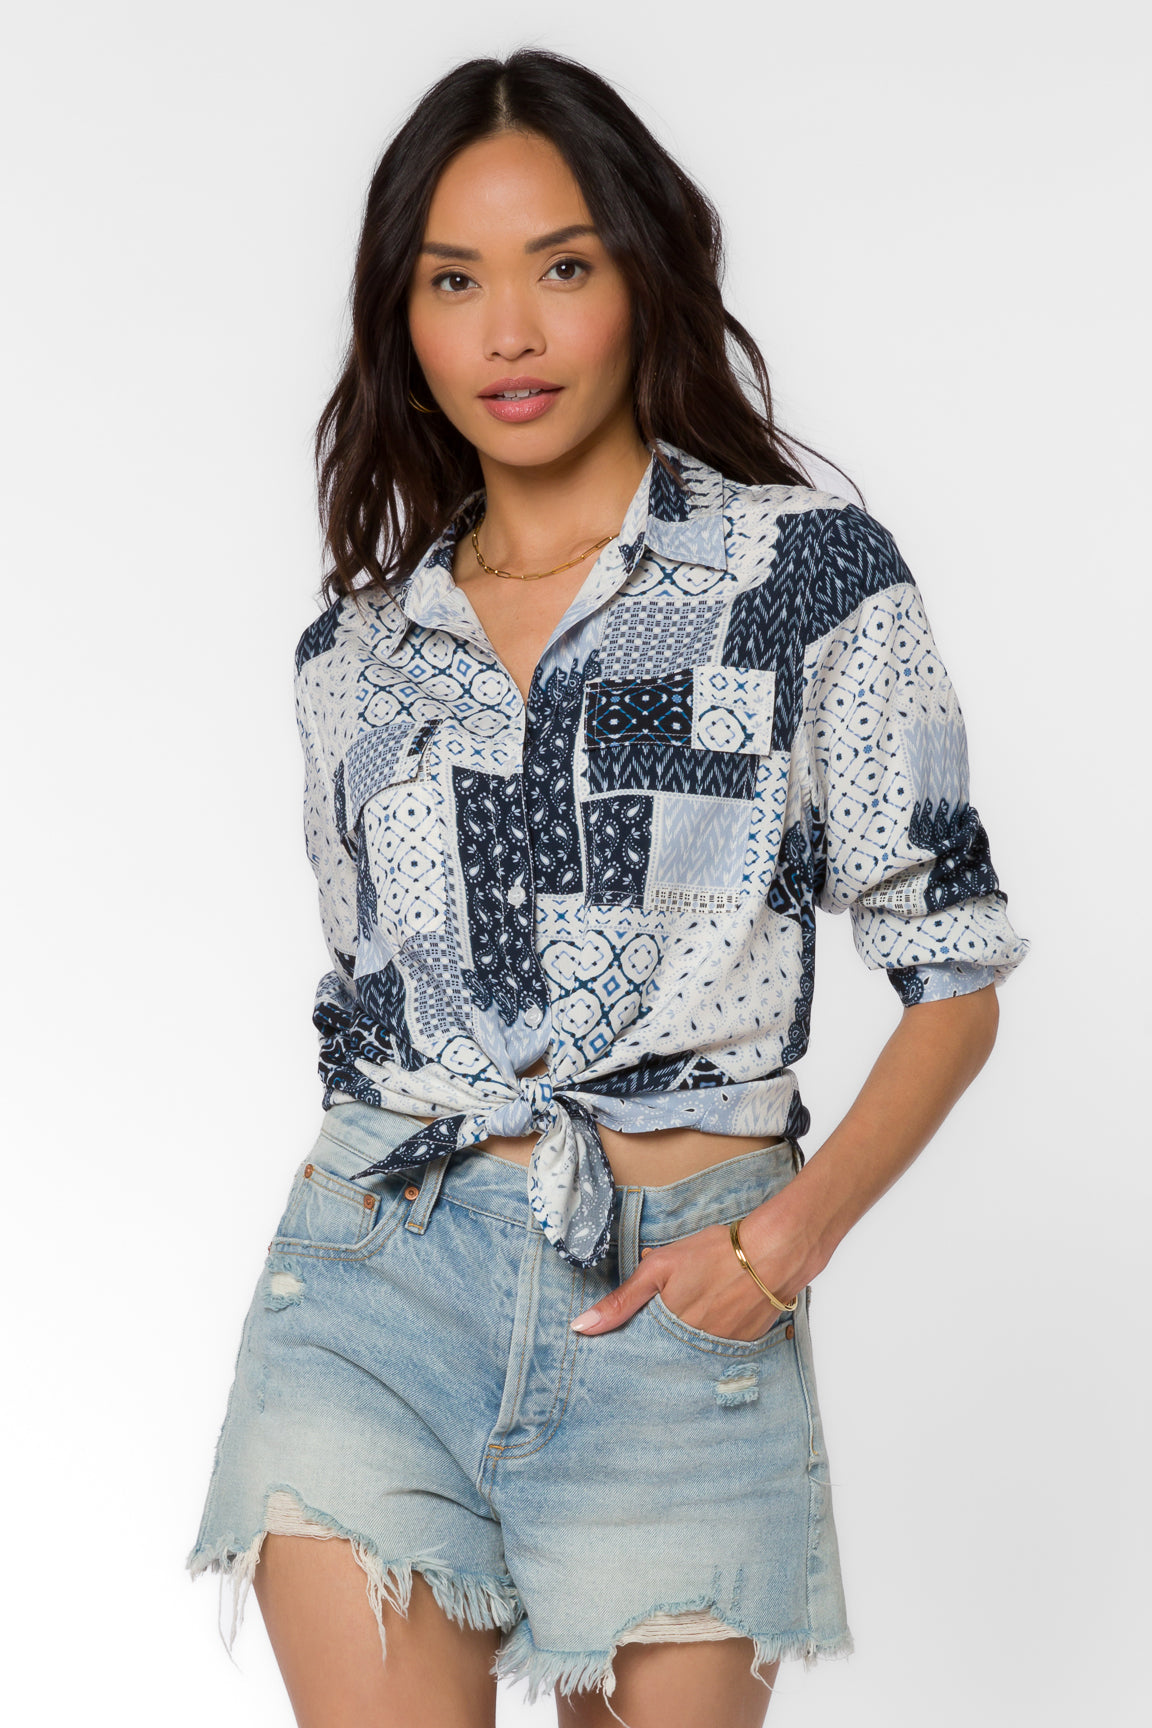 Talma Navy Patchwork Shirt - Tops - Velvet Heart Clothing